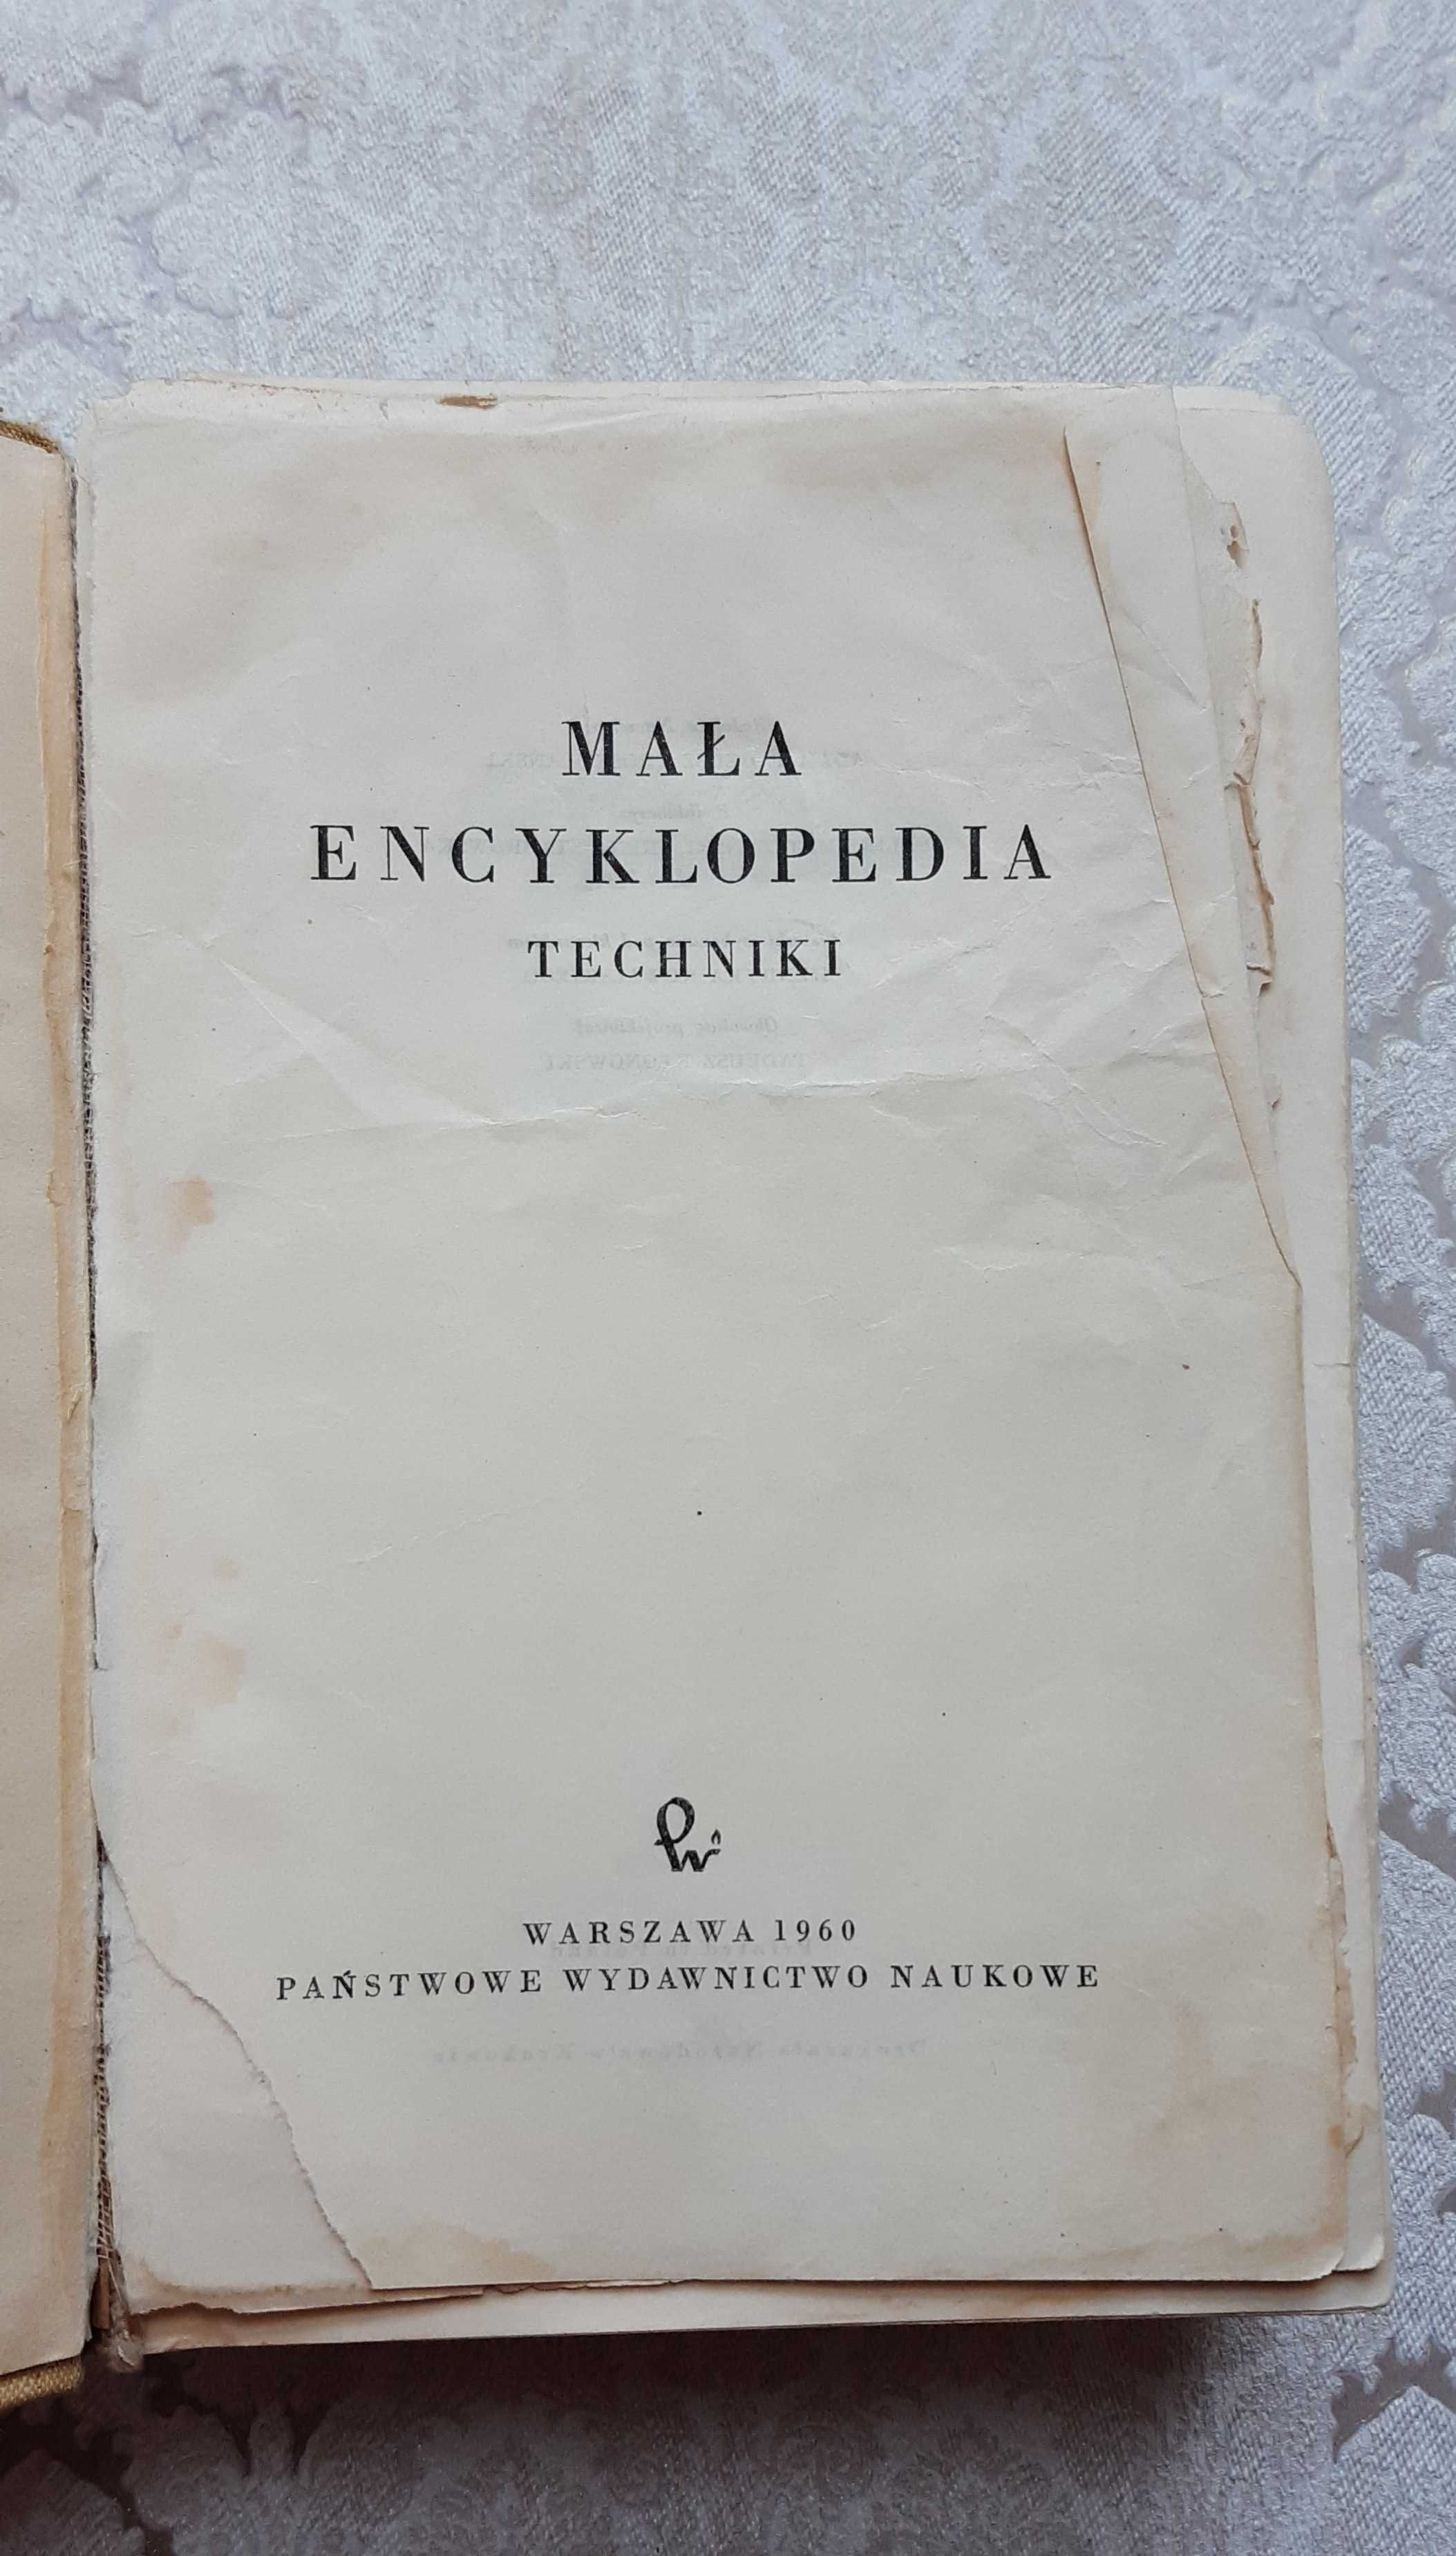 "Mała encyklopedia techniki"